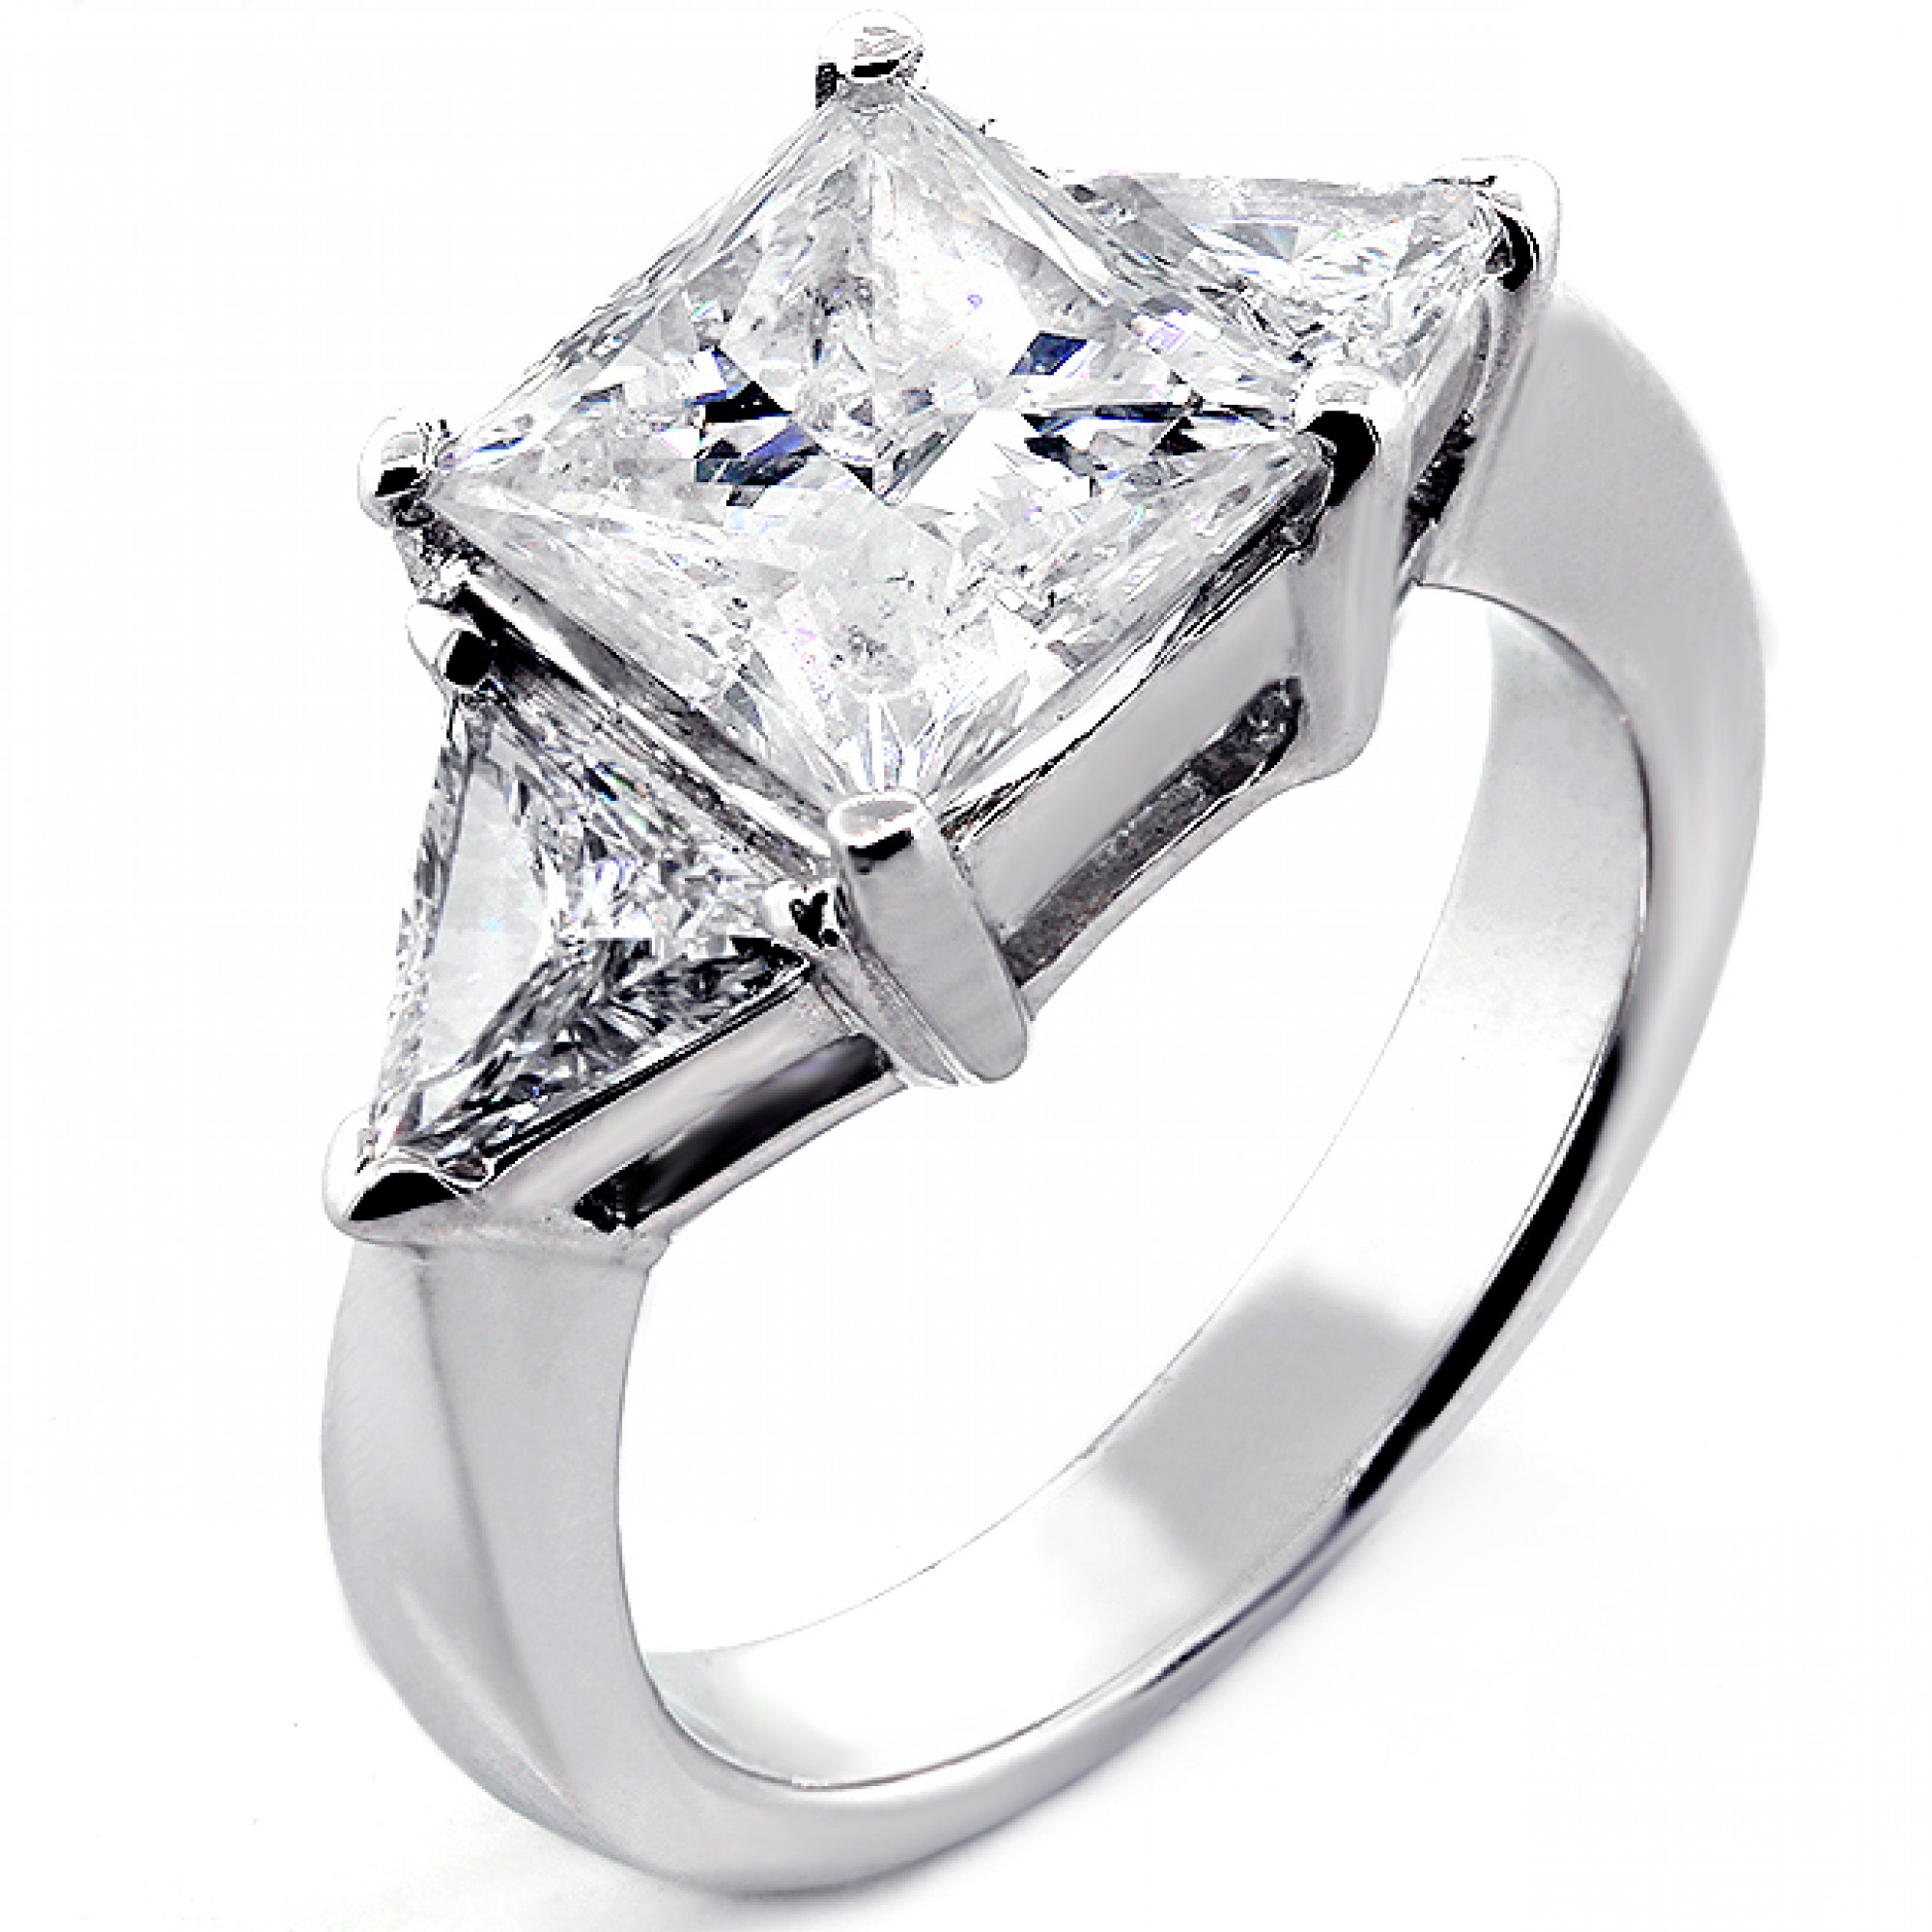 4.03 Cts Princess Cut and Trillion Cut Three Stone Engagement Ring set ...